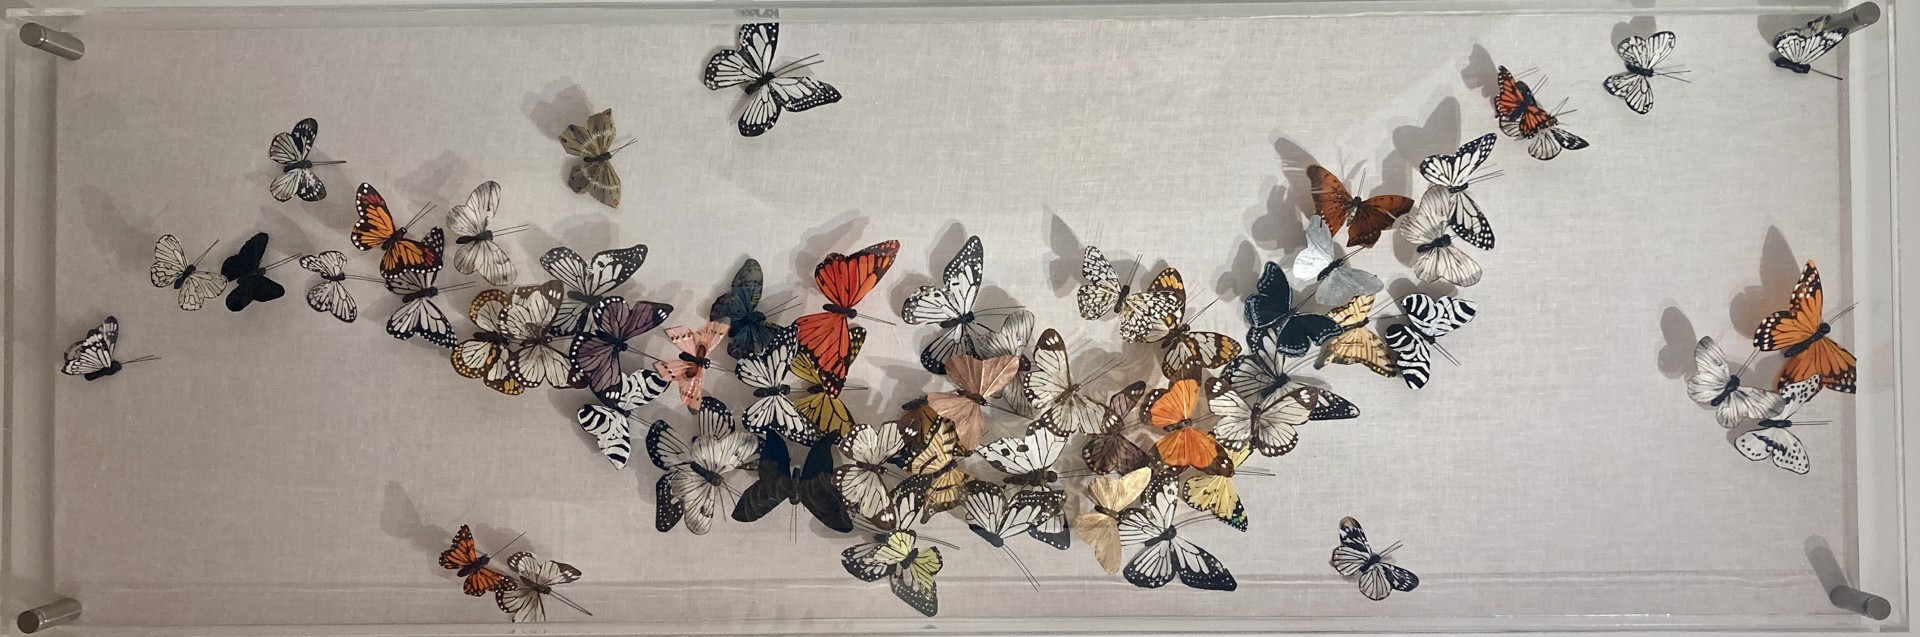 Flutter by Juan Carlos Collada